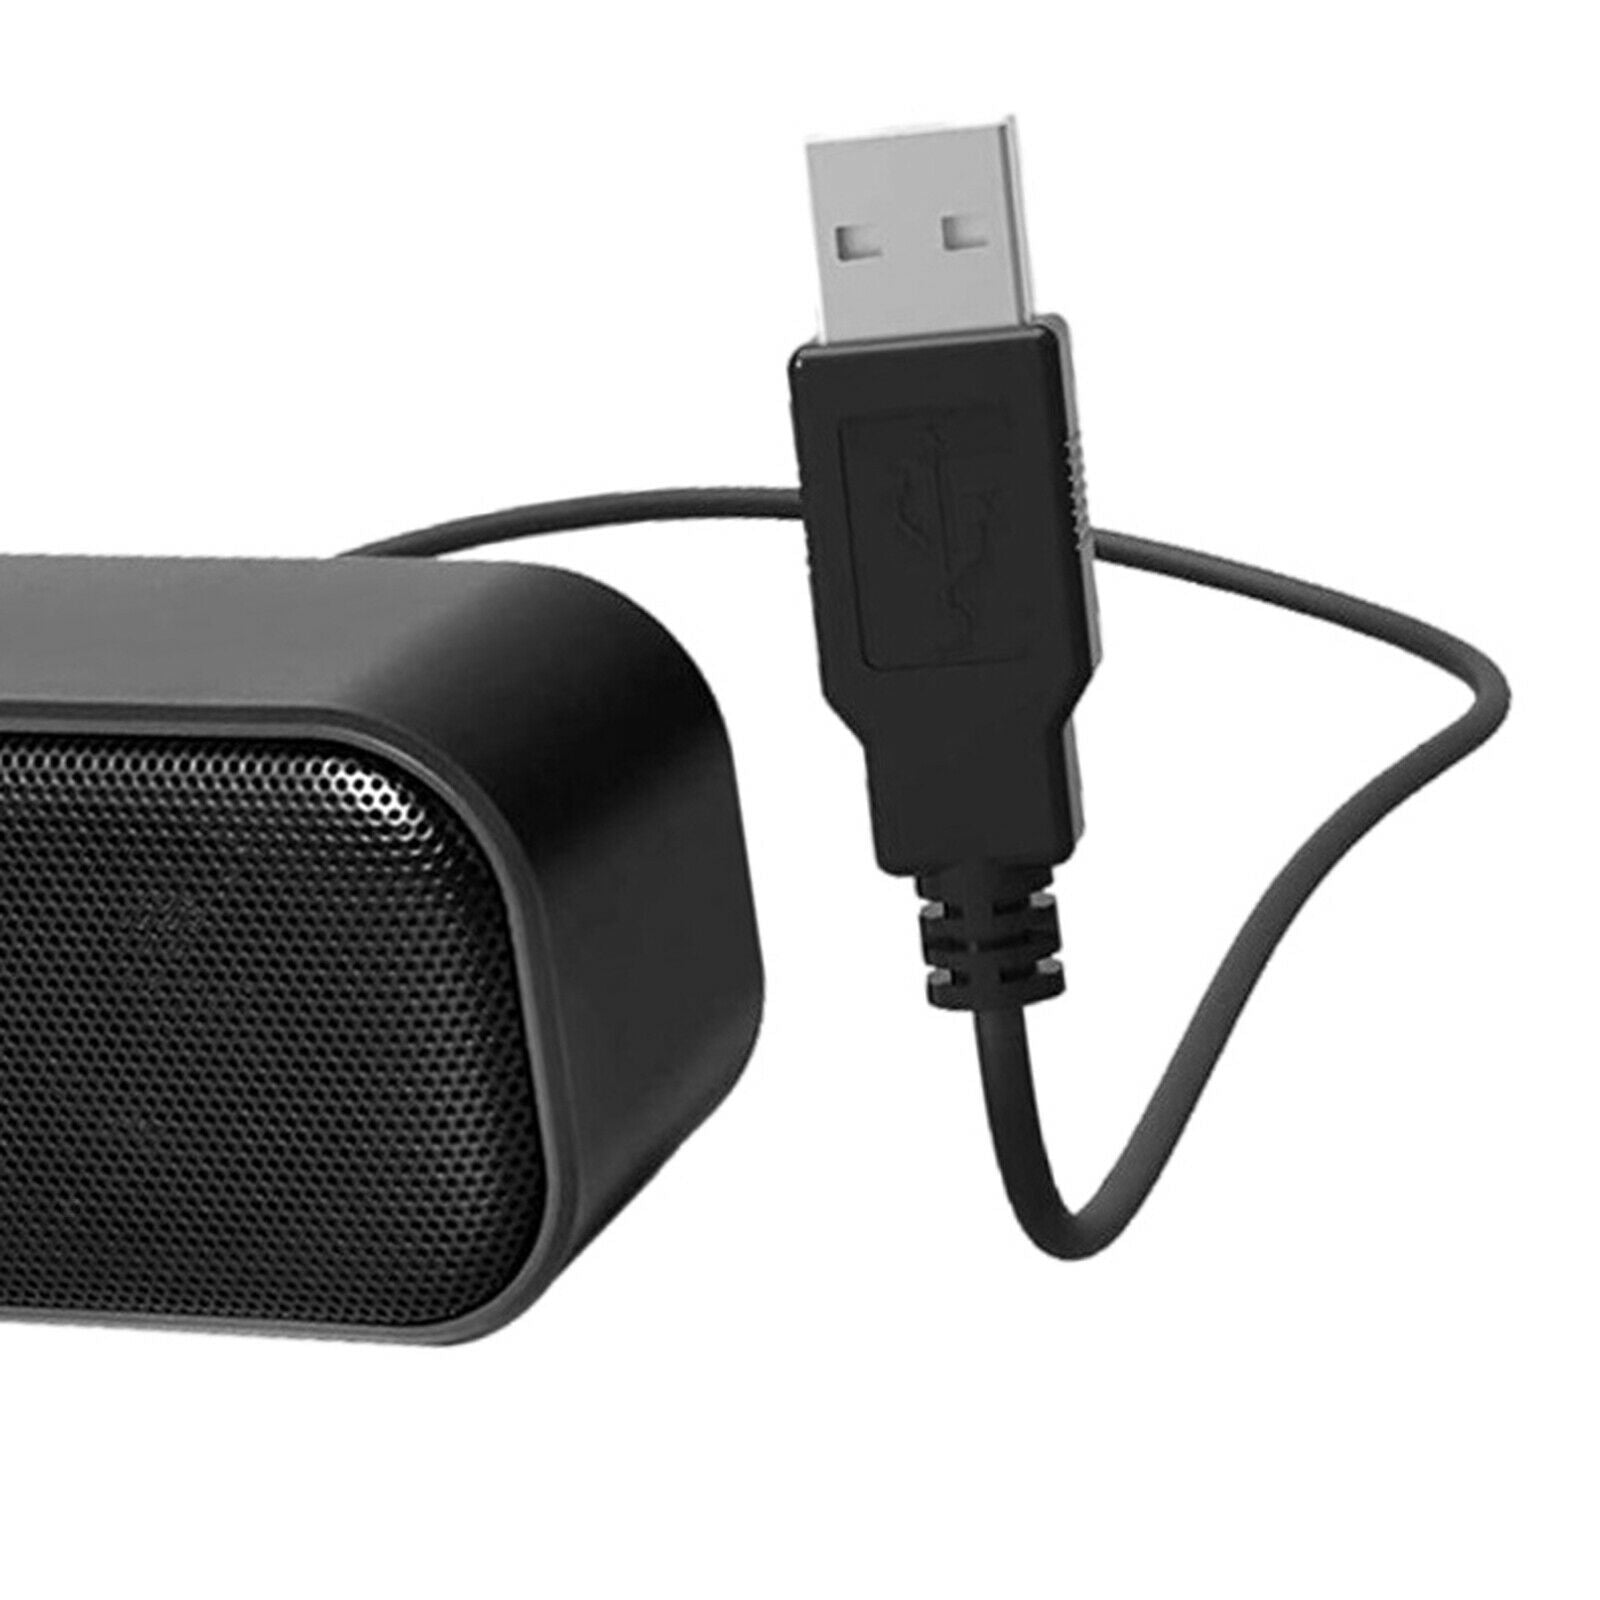 Mini Speaker Rich Bass Laptop Soundbar Multimedia Musical Player for Home